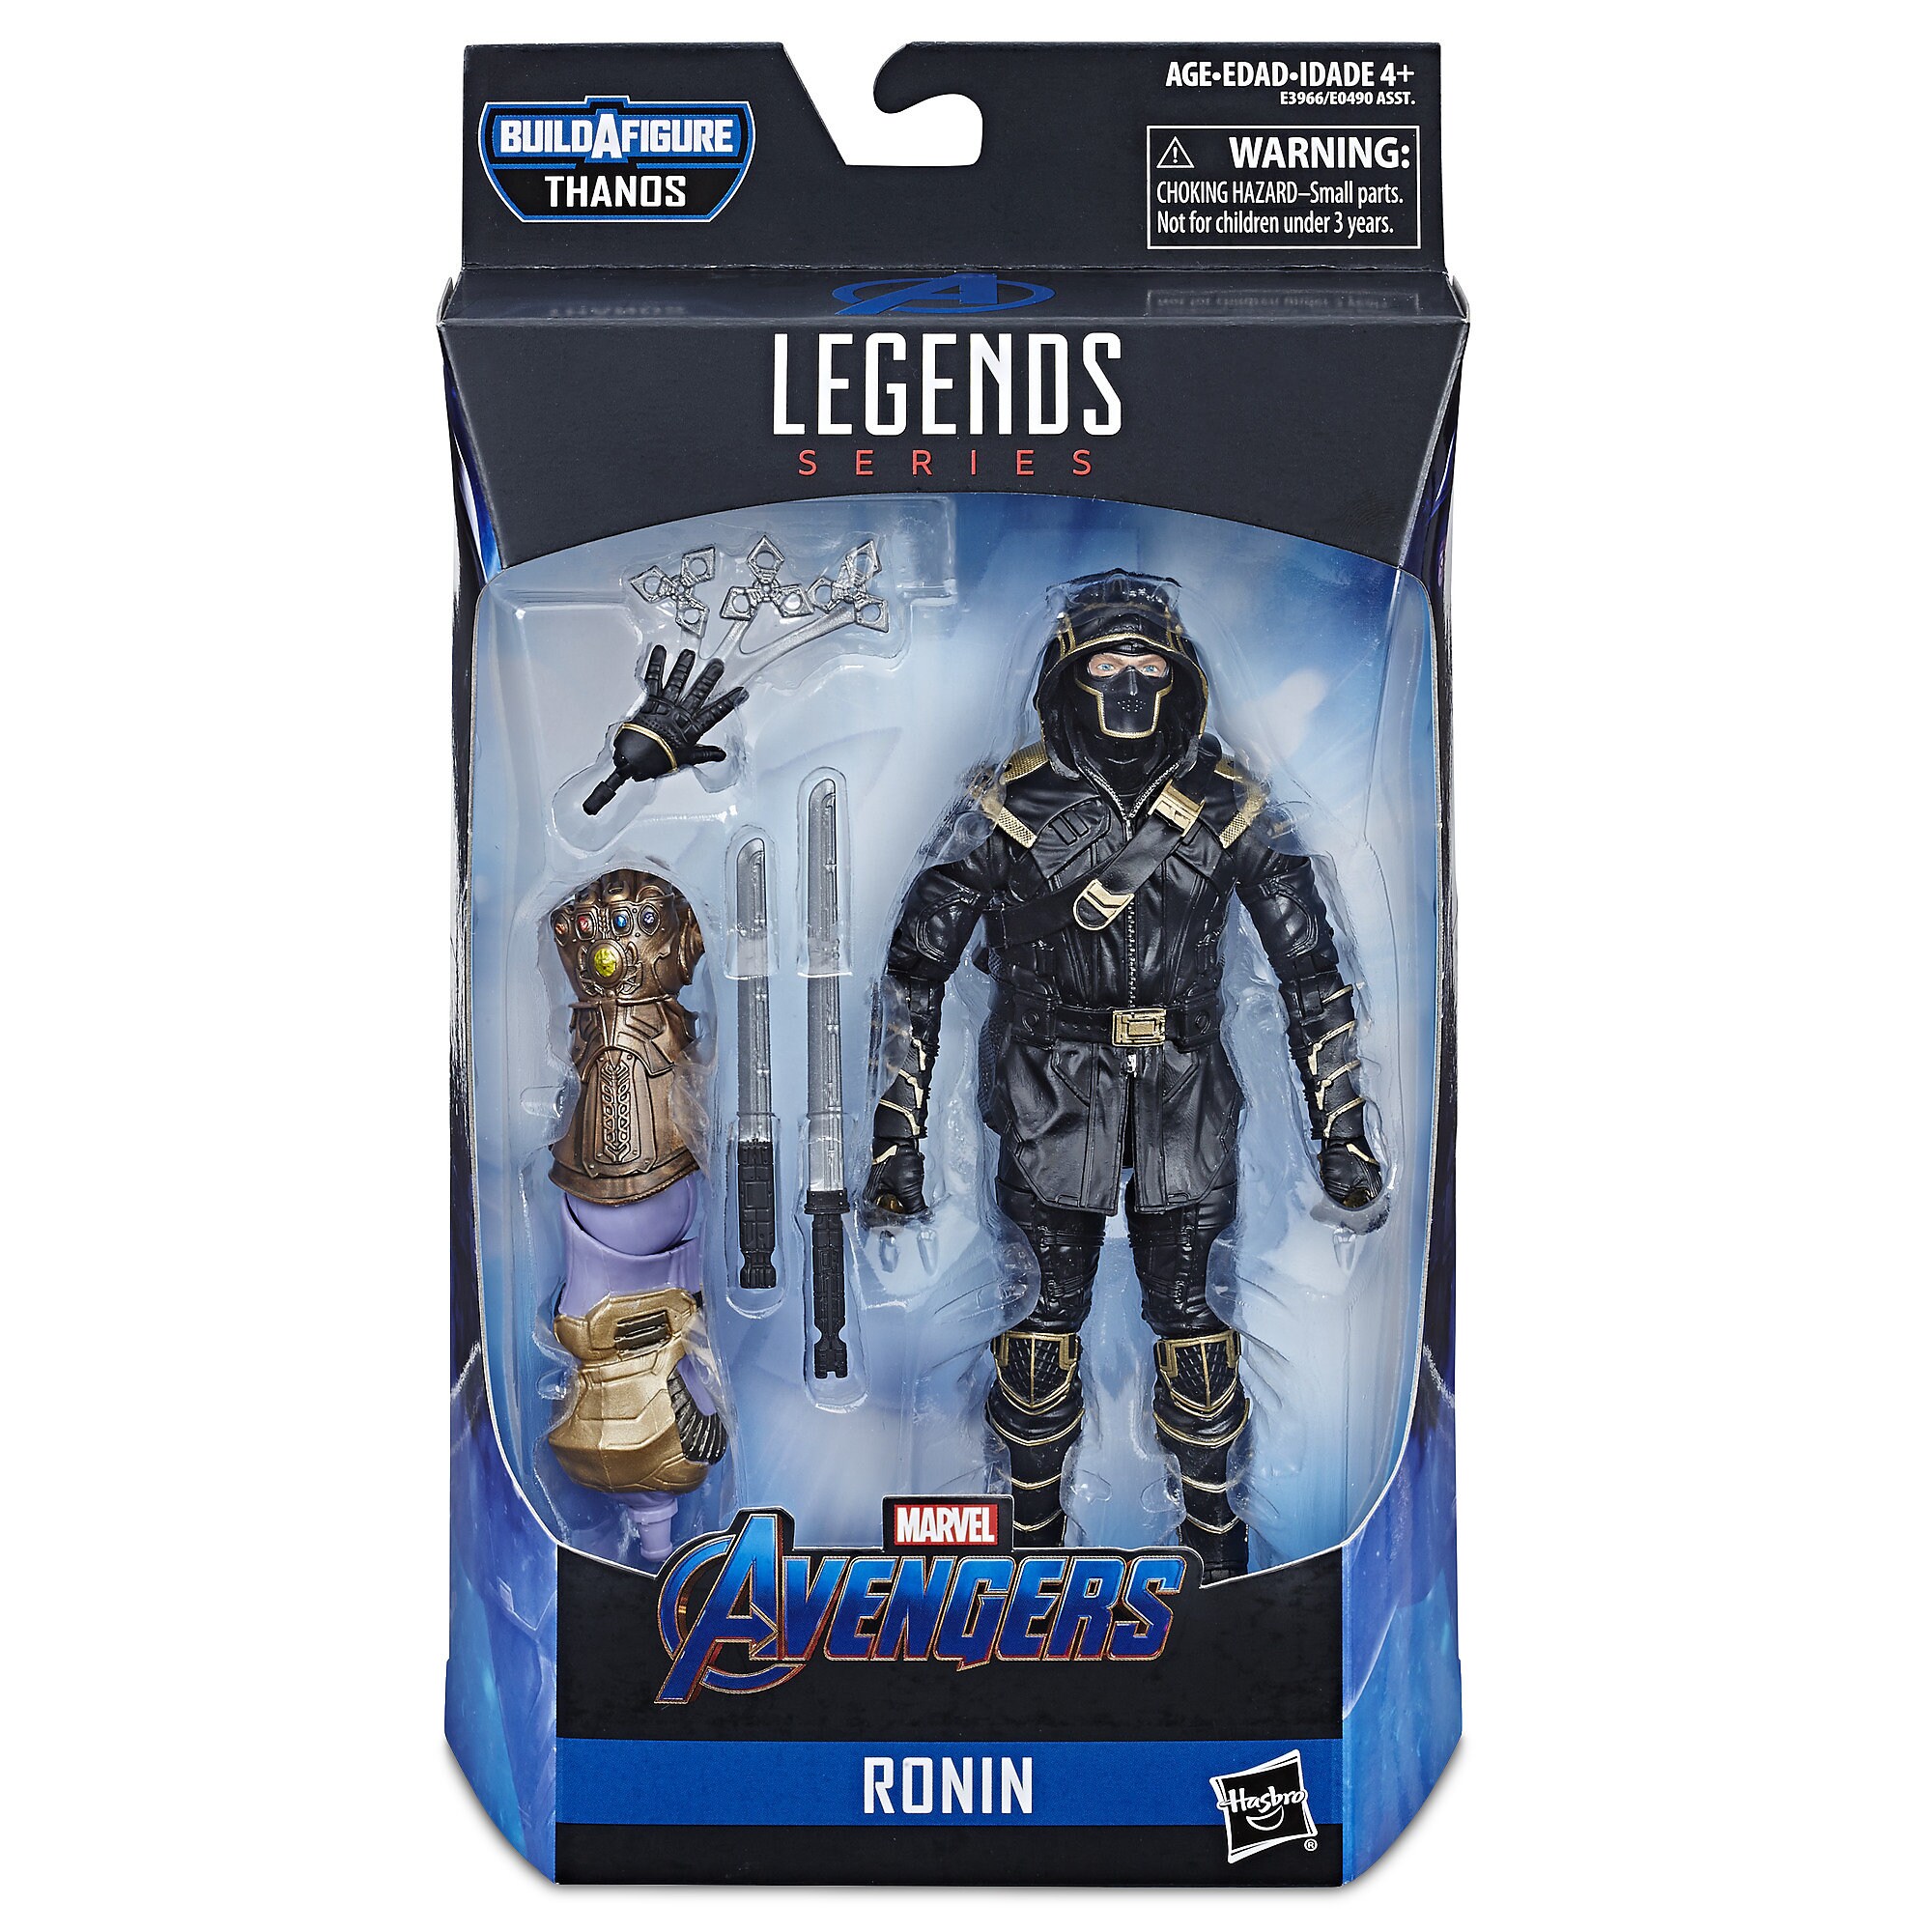 Ronin Action Figure - Legends Series